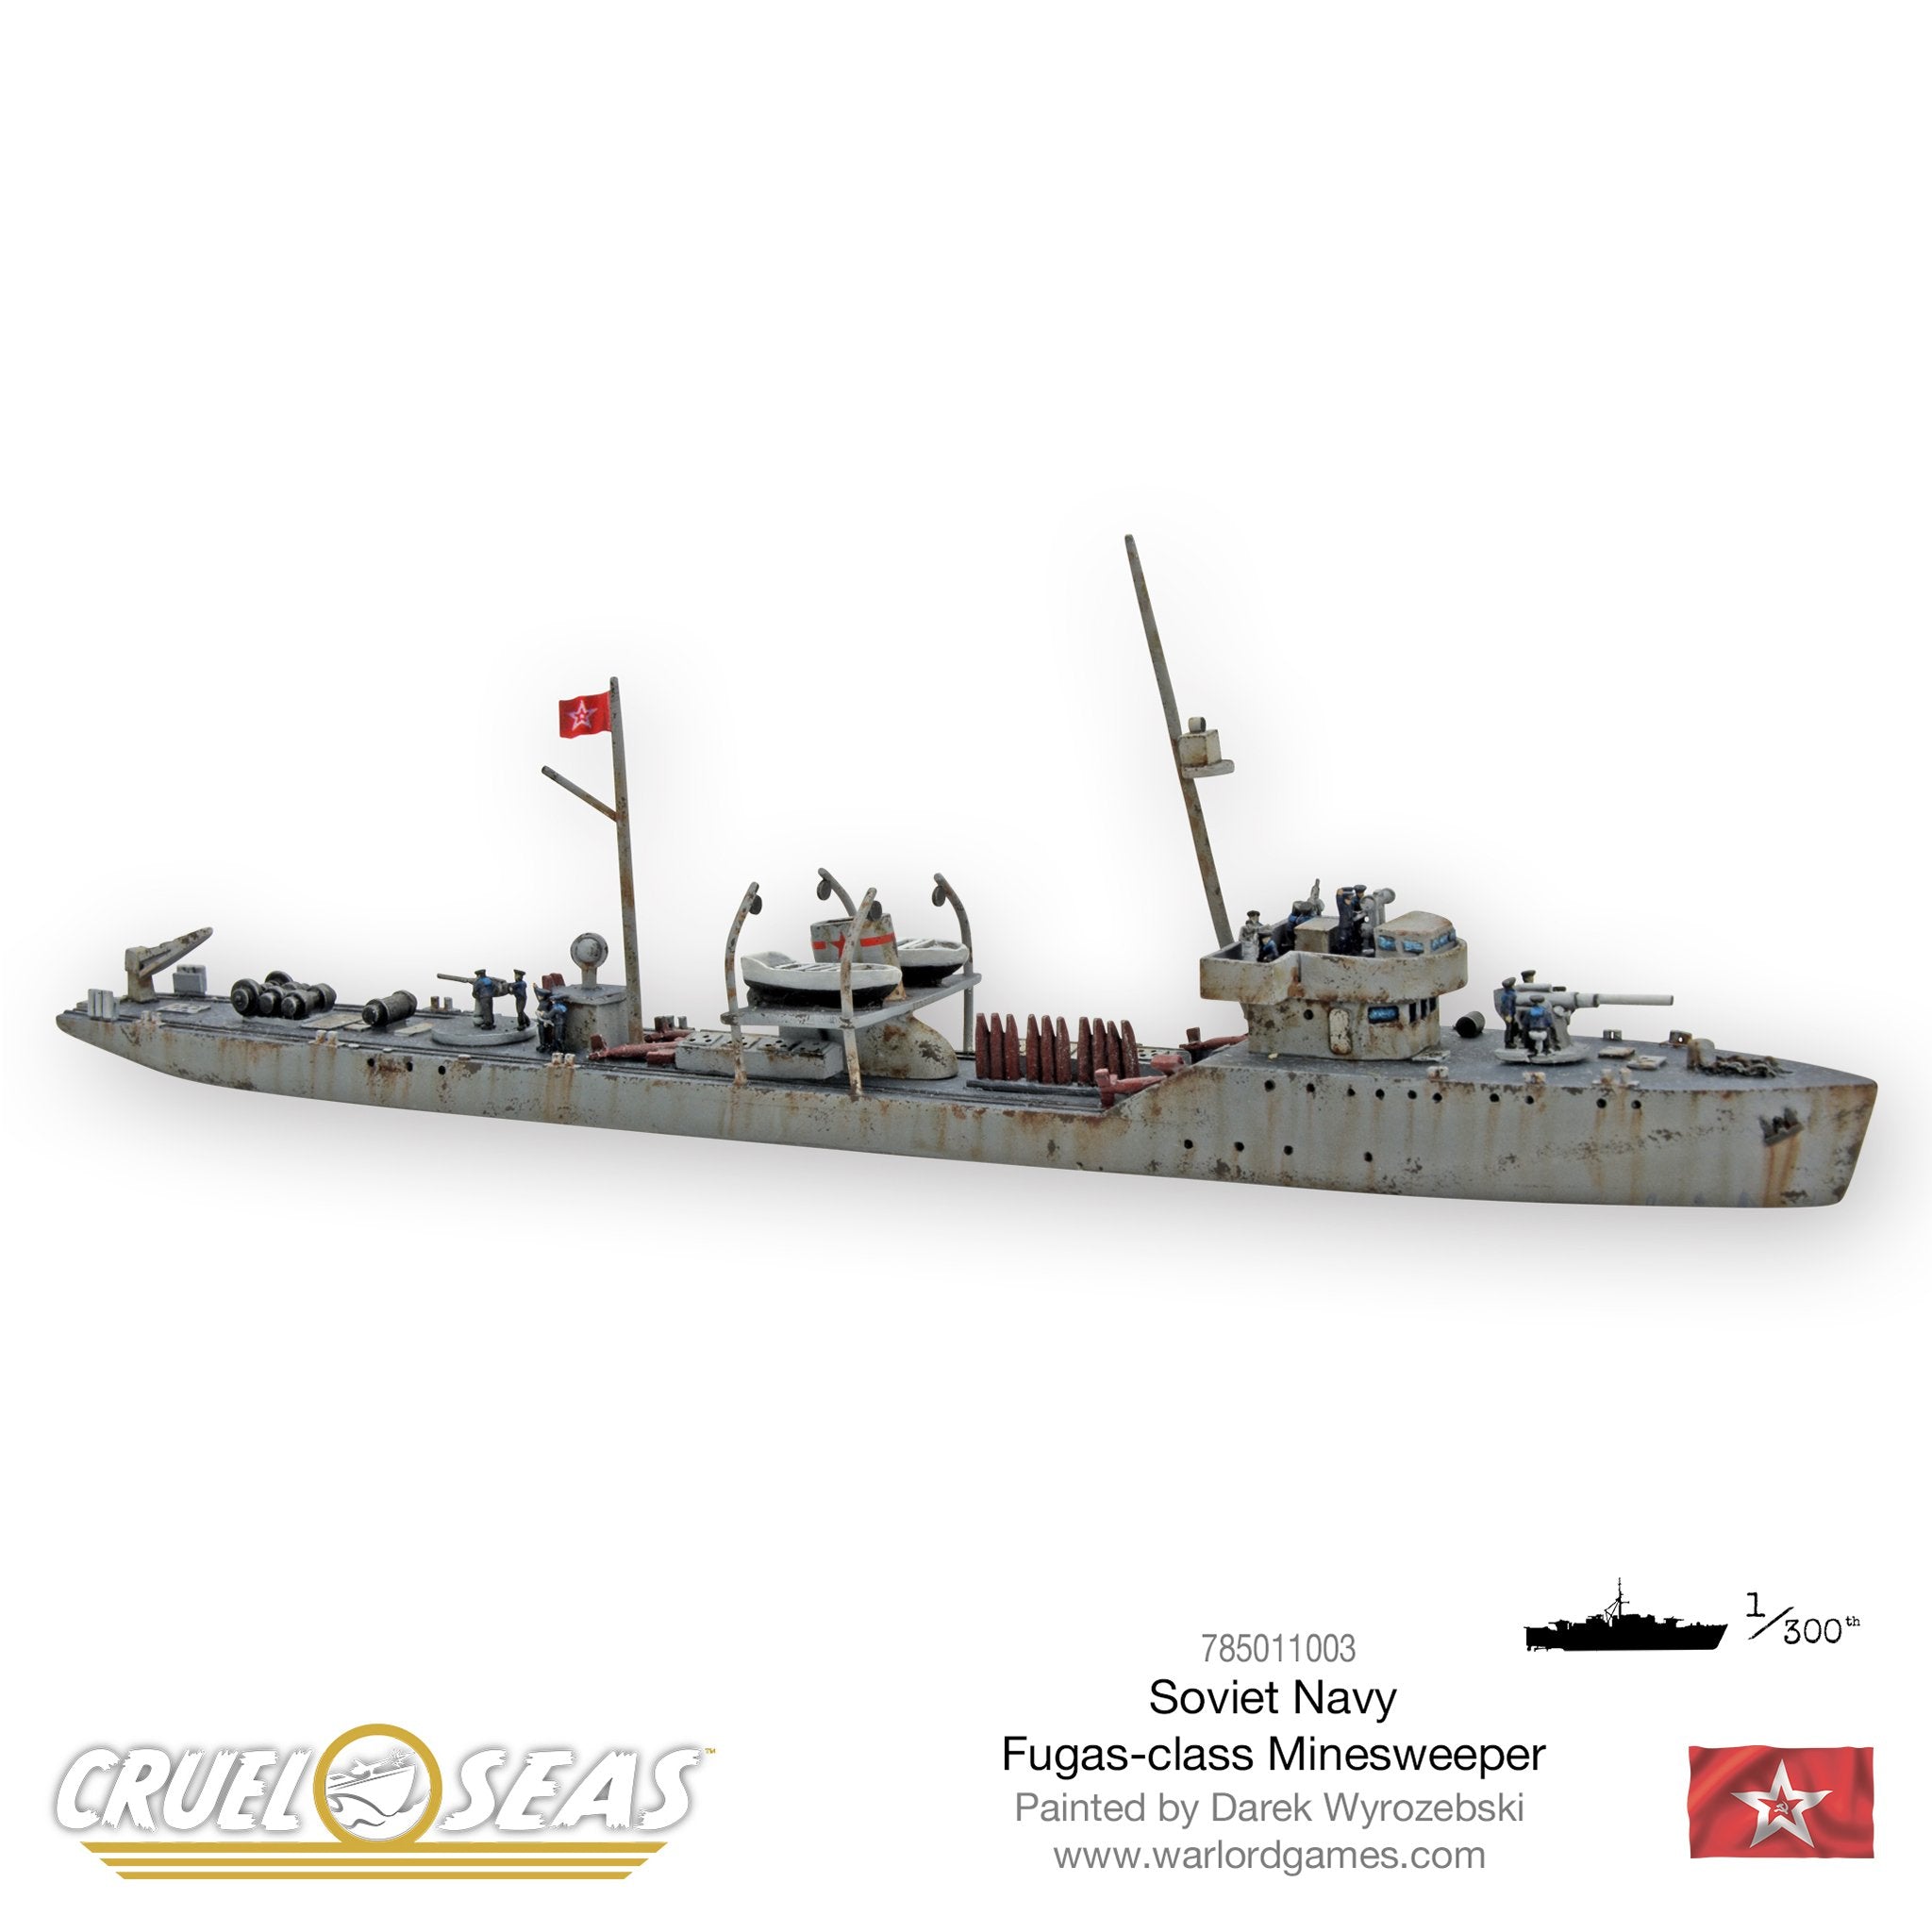 Soviet Fugas-class Minesweeper